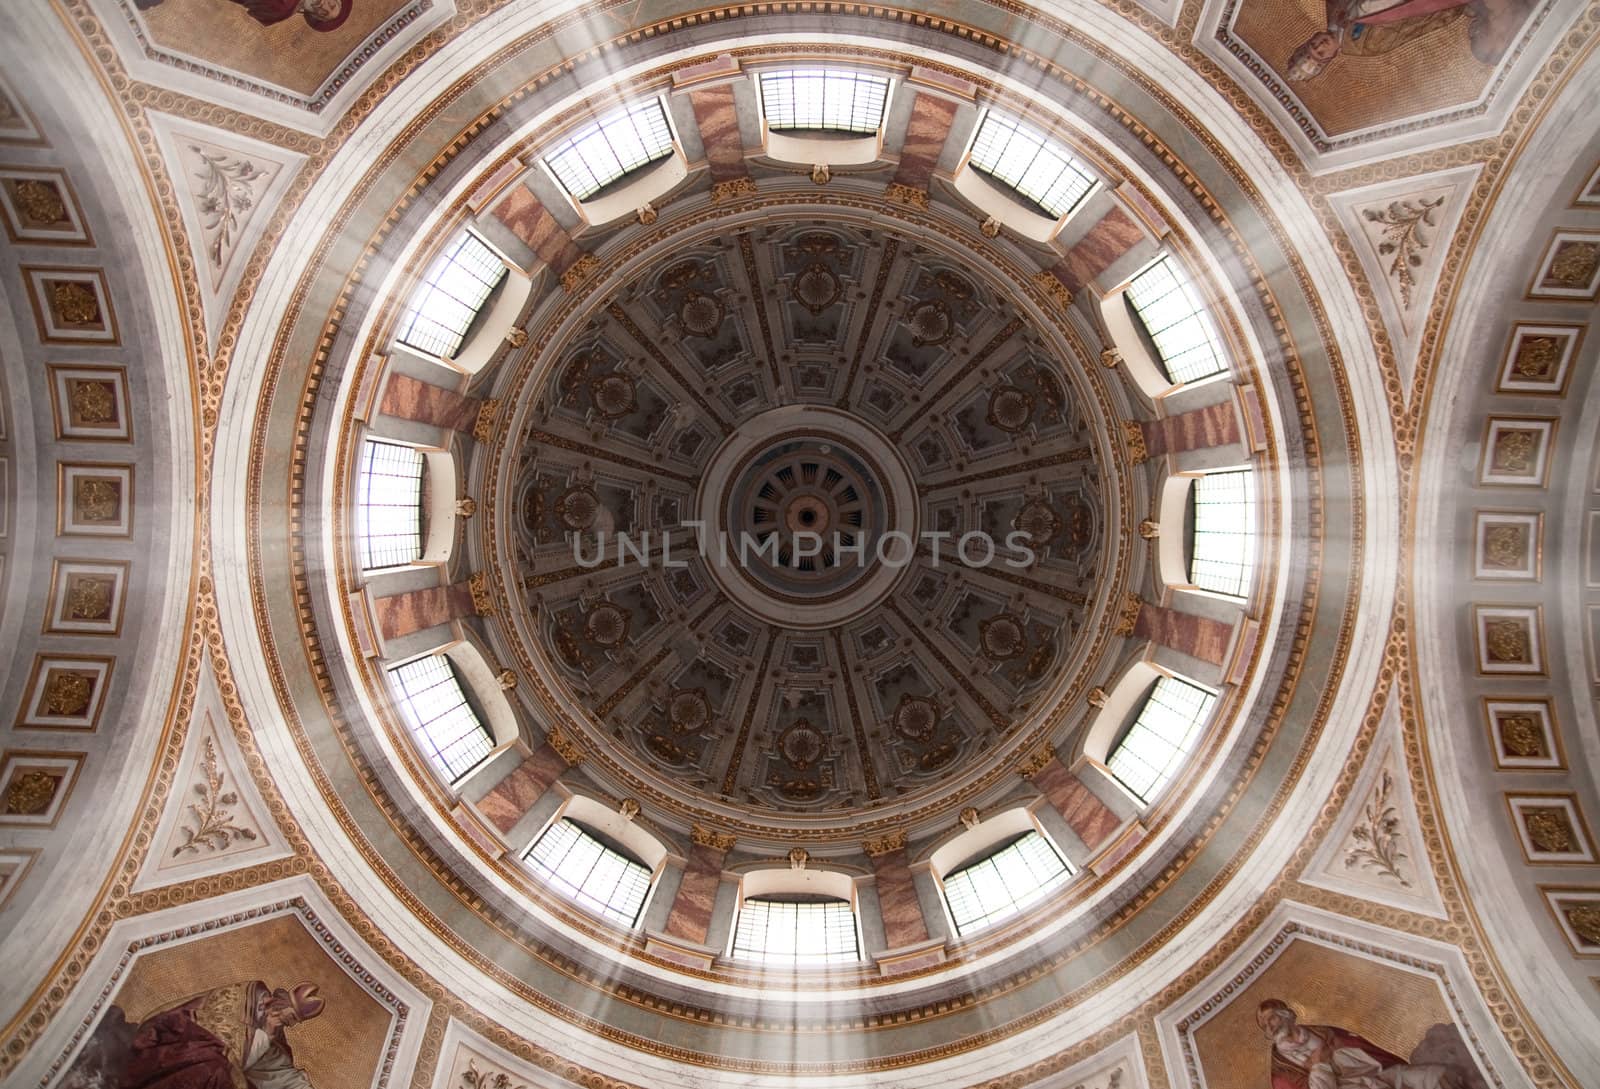 Basilica cupola by Rainman